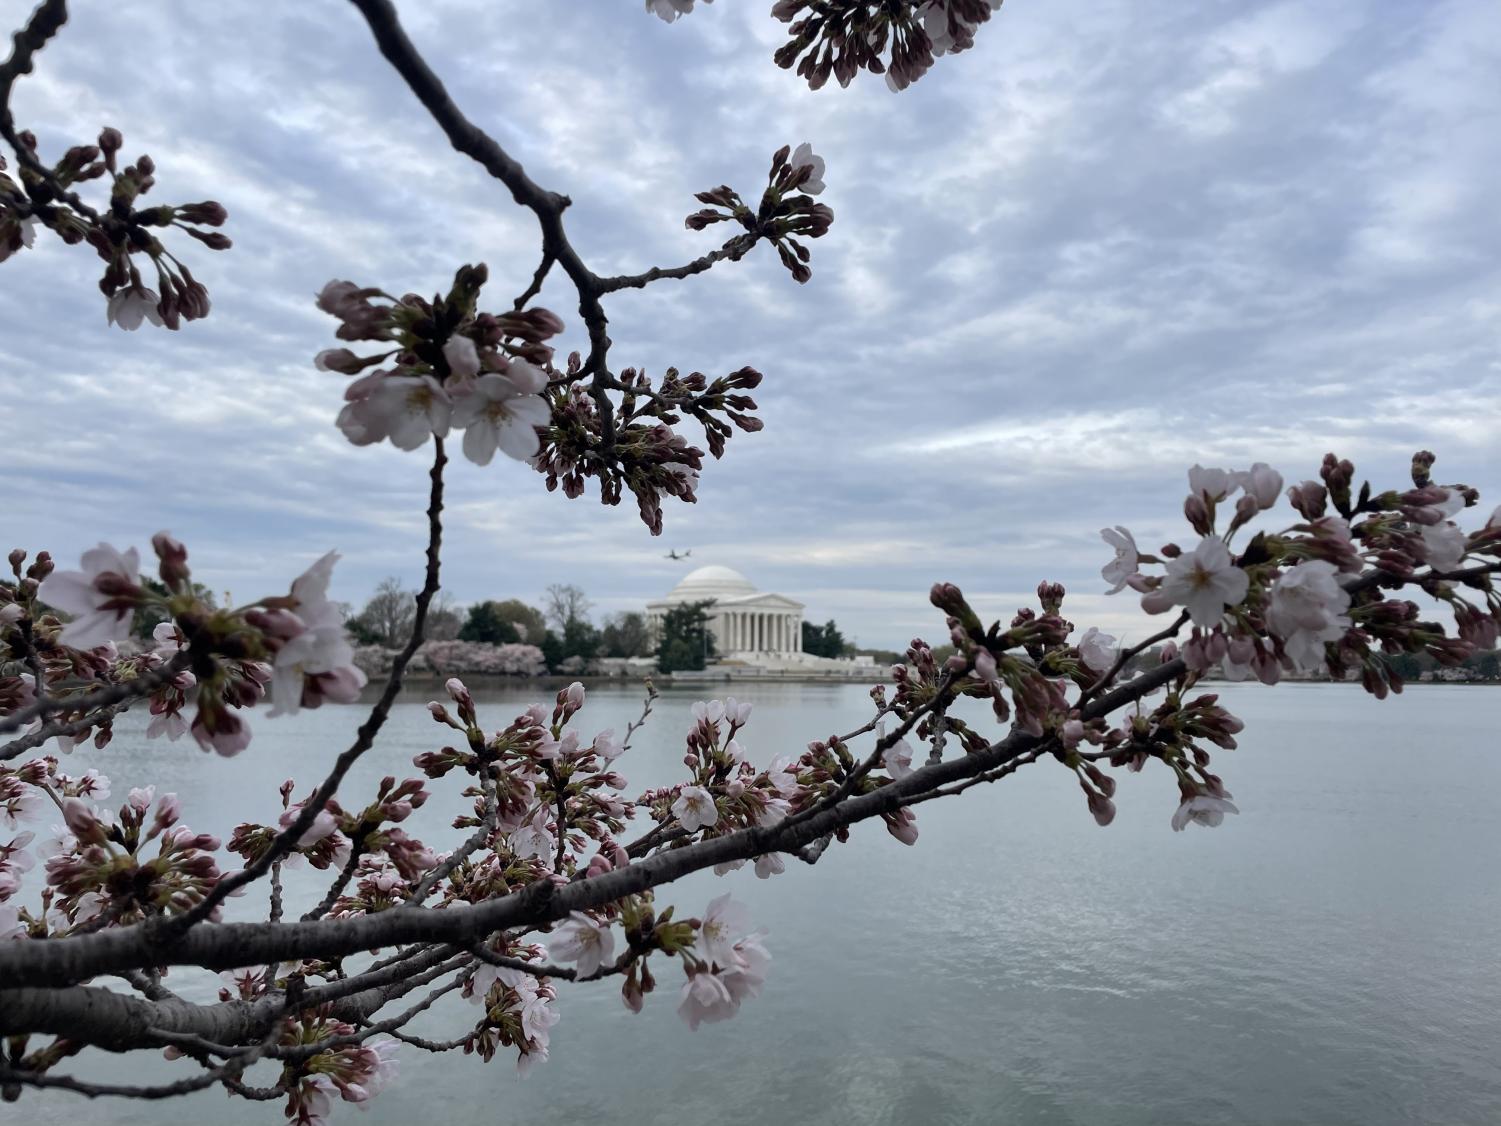 During National Cherry Blossom Festival Ronald Reagan Washington